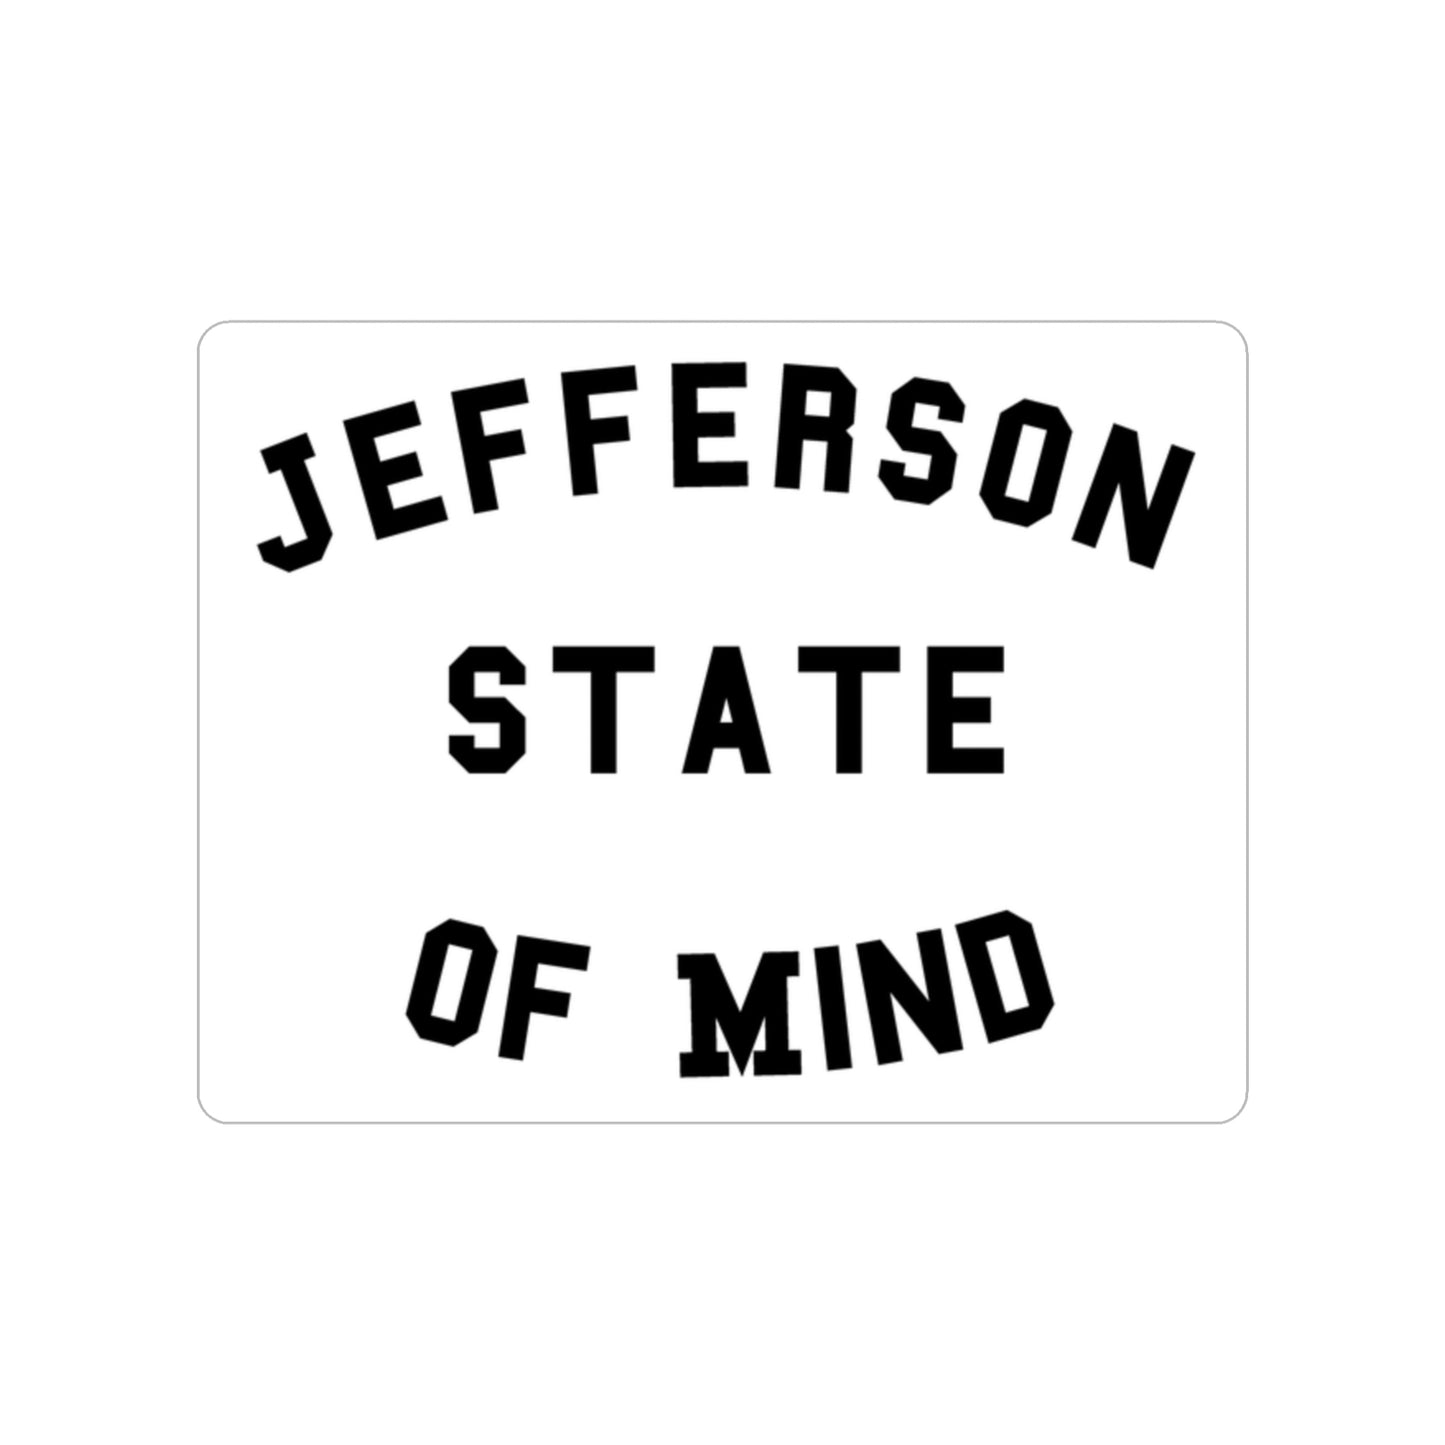 Jefferson State of Mind Clear Background Outdoor Sticker